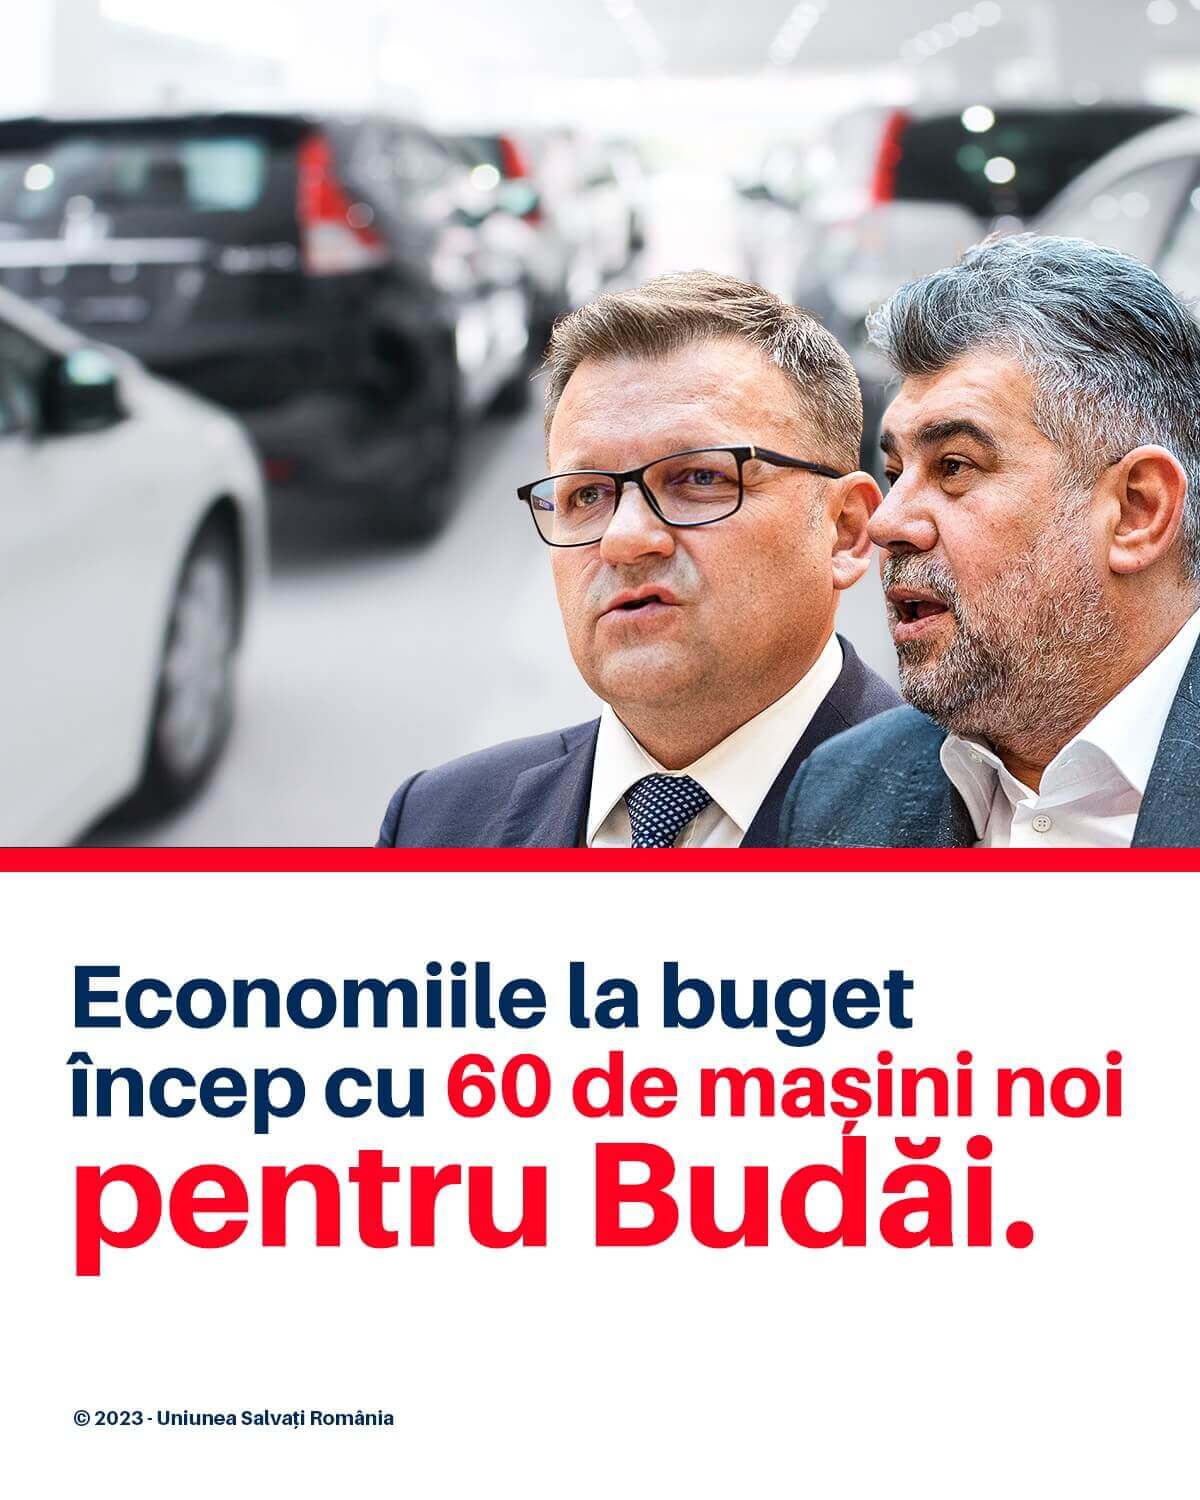 PSD, Budai, economie la buget